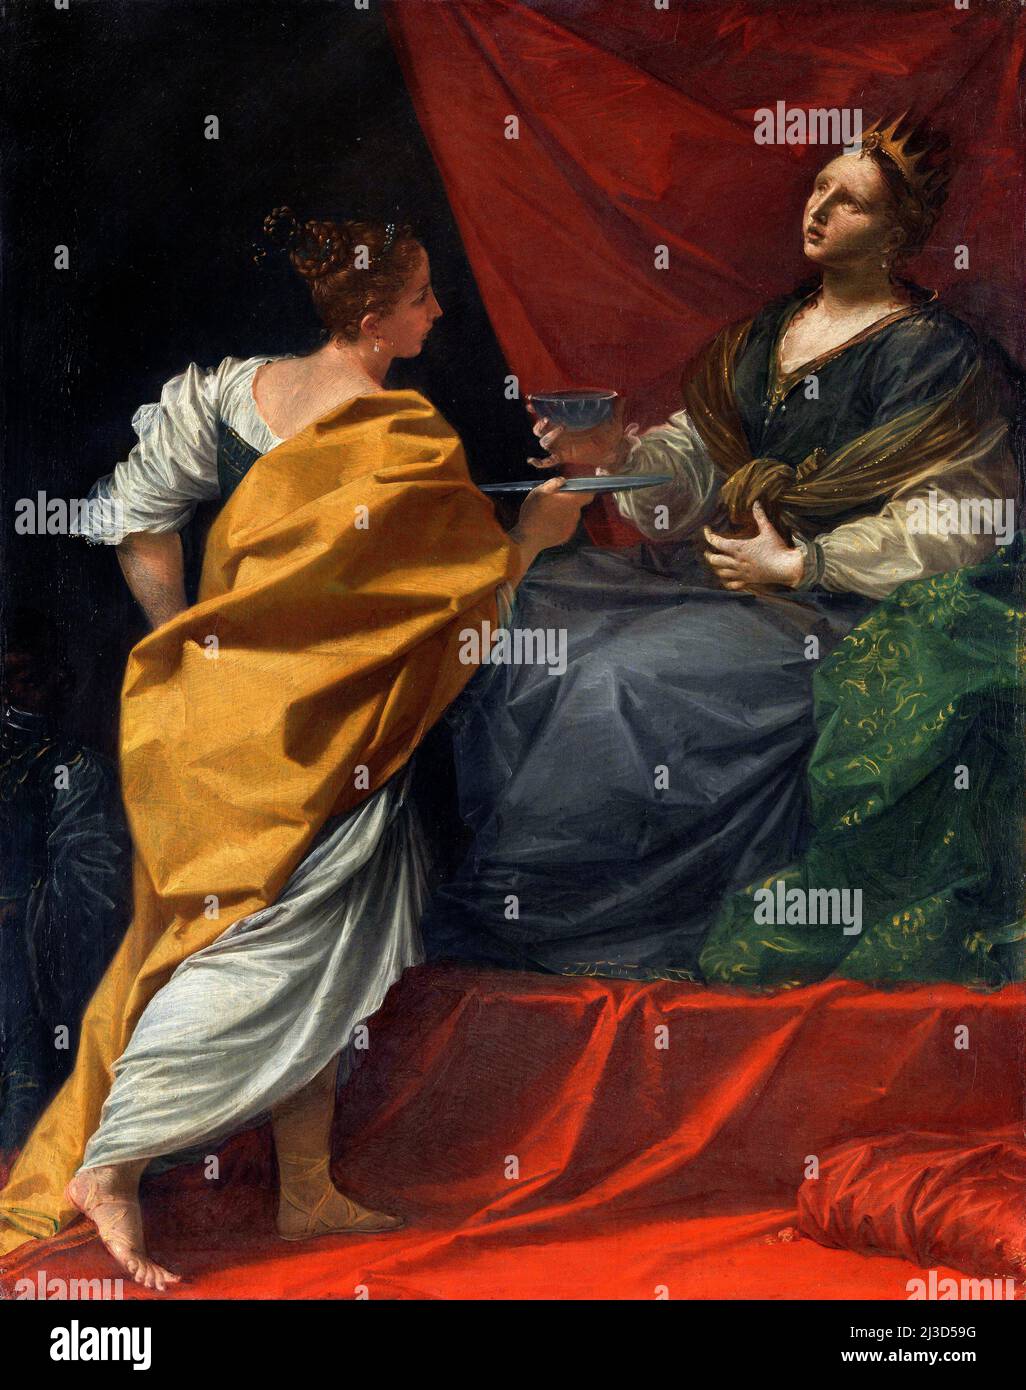 Artemisia bebiendo las cenizas de Mausolus por el rococo italiano, Donato Creti (1671-1749), óleo sobre lienzo, c. 1713/14 Foto de stock